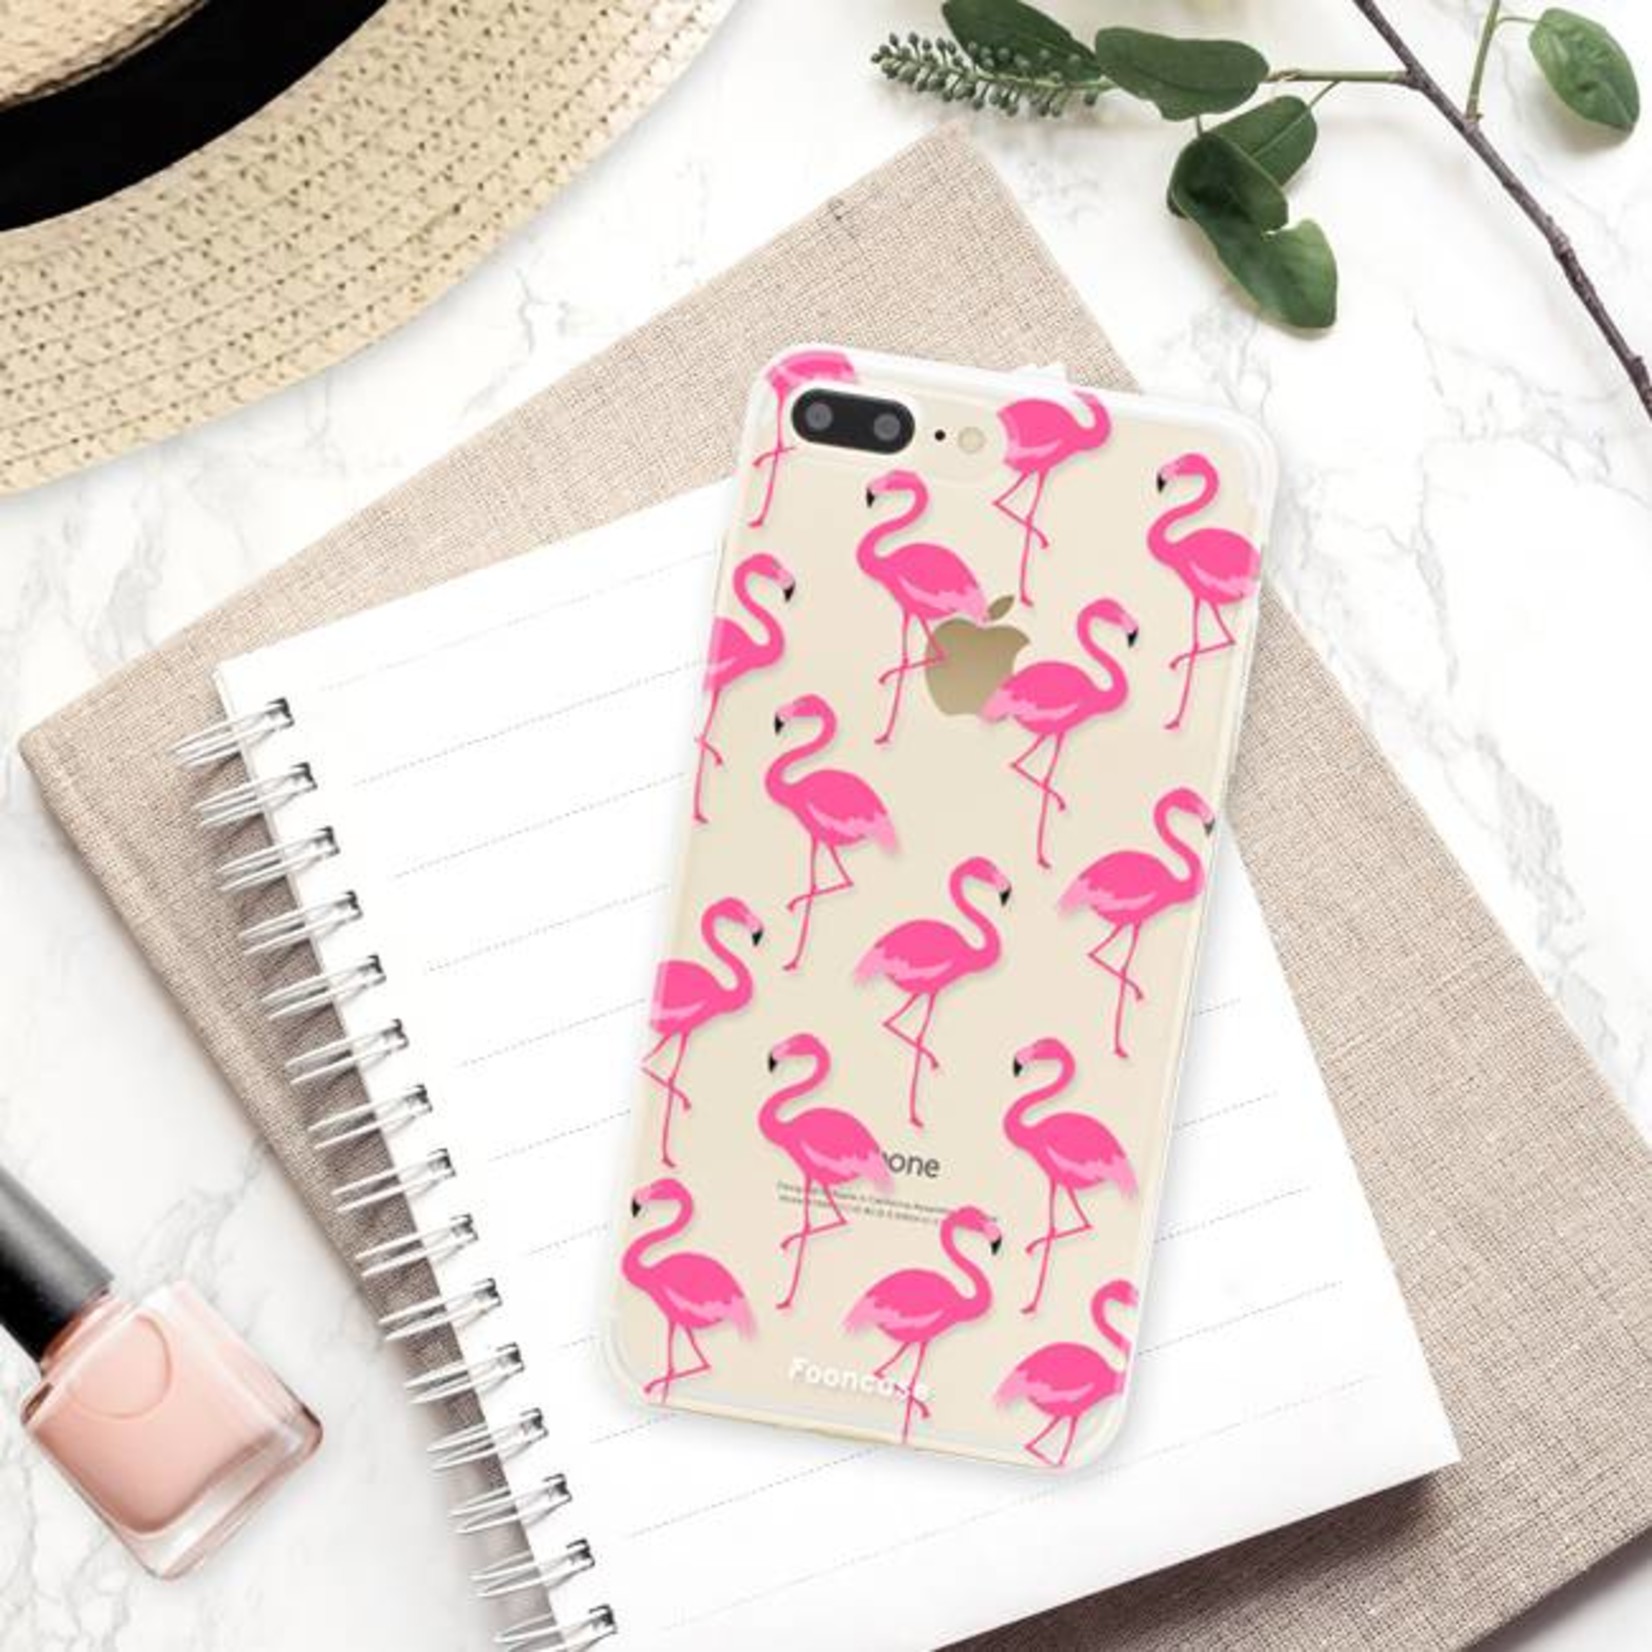 FOONCASE iPhone 8 Plus hoesje TPU Soft Case - Back Cover - Flamingo